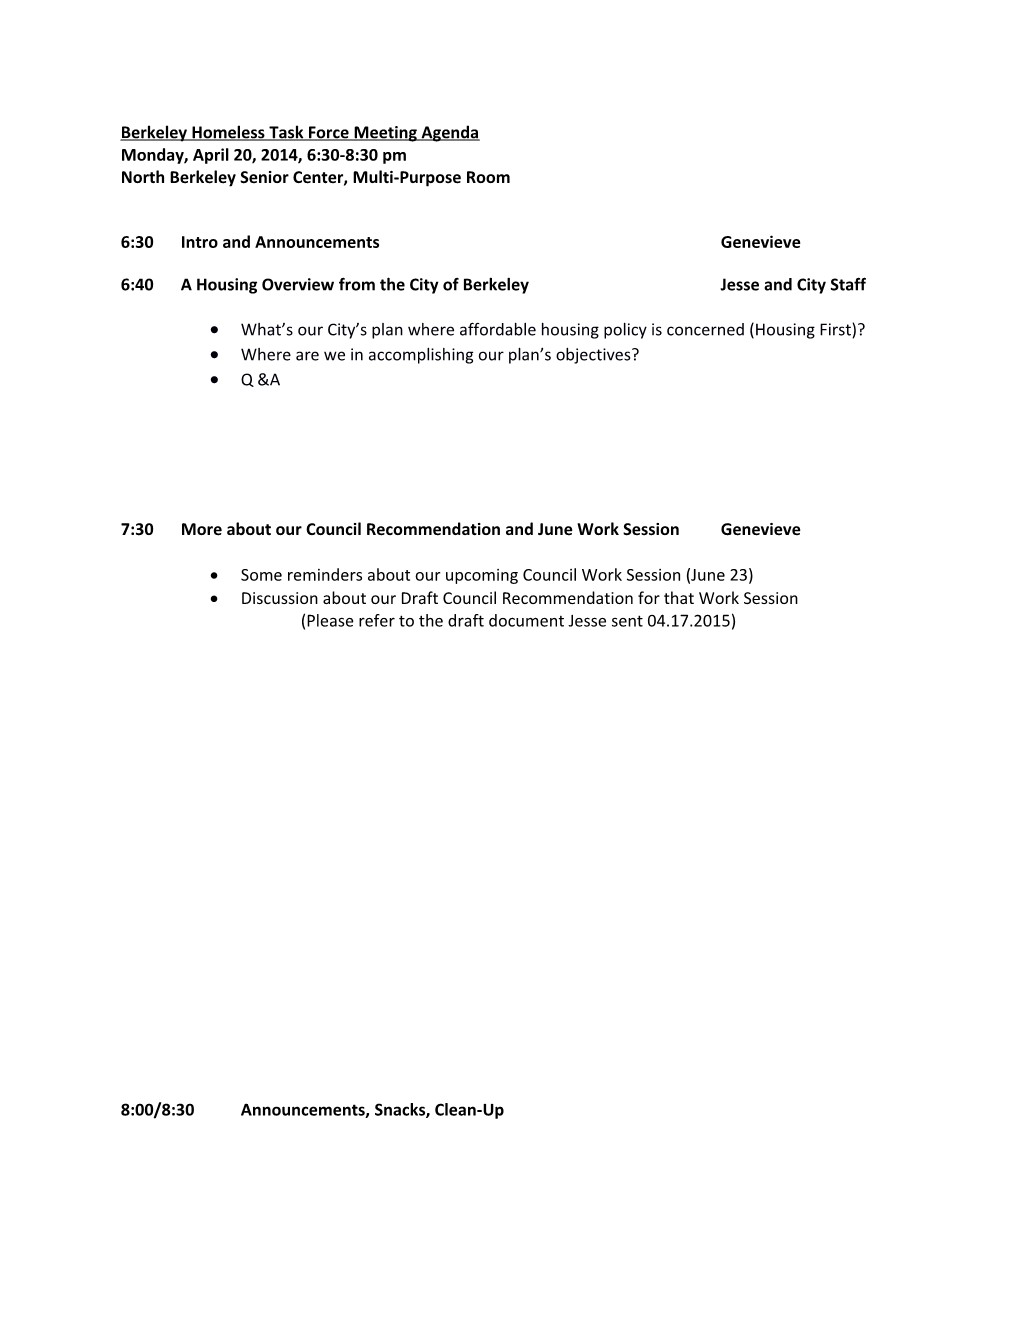 Berkeley Homeless Task Force Meeting Agenda s1